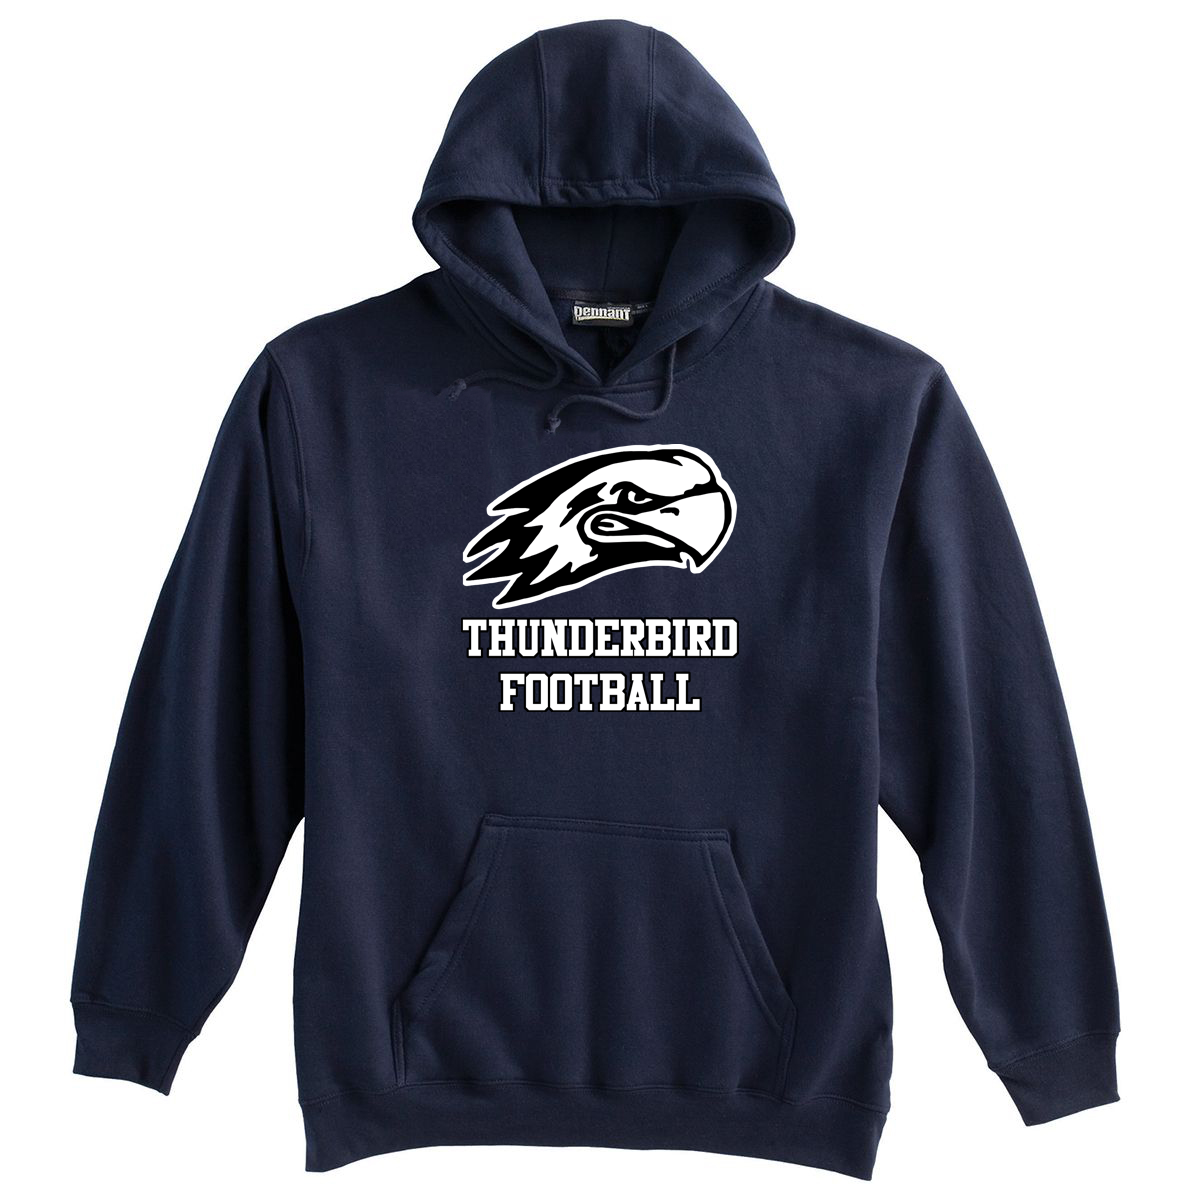 Chautuauqua Lake Football Sweatshirt